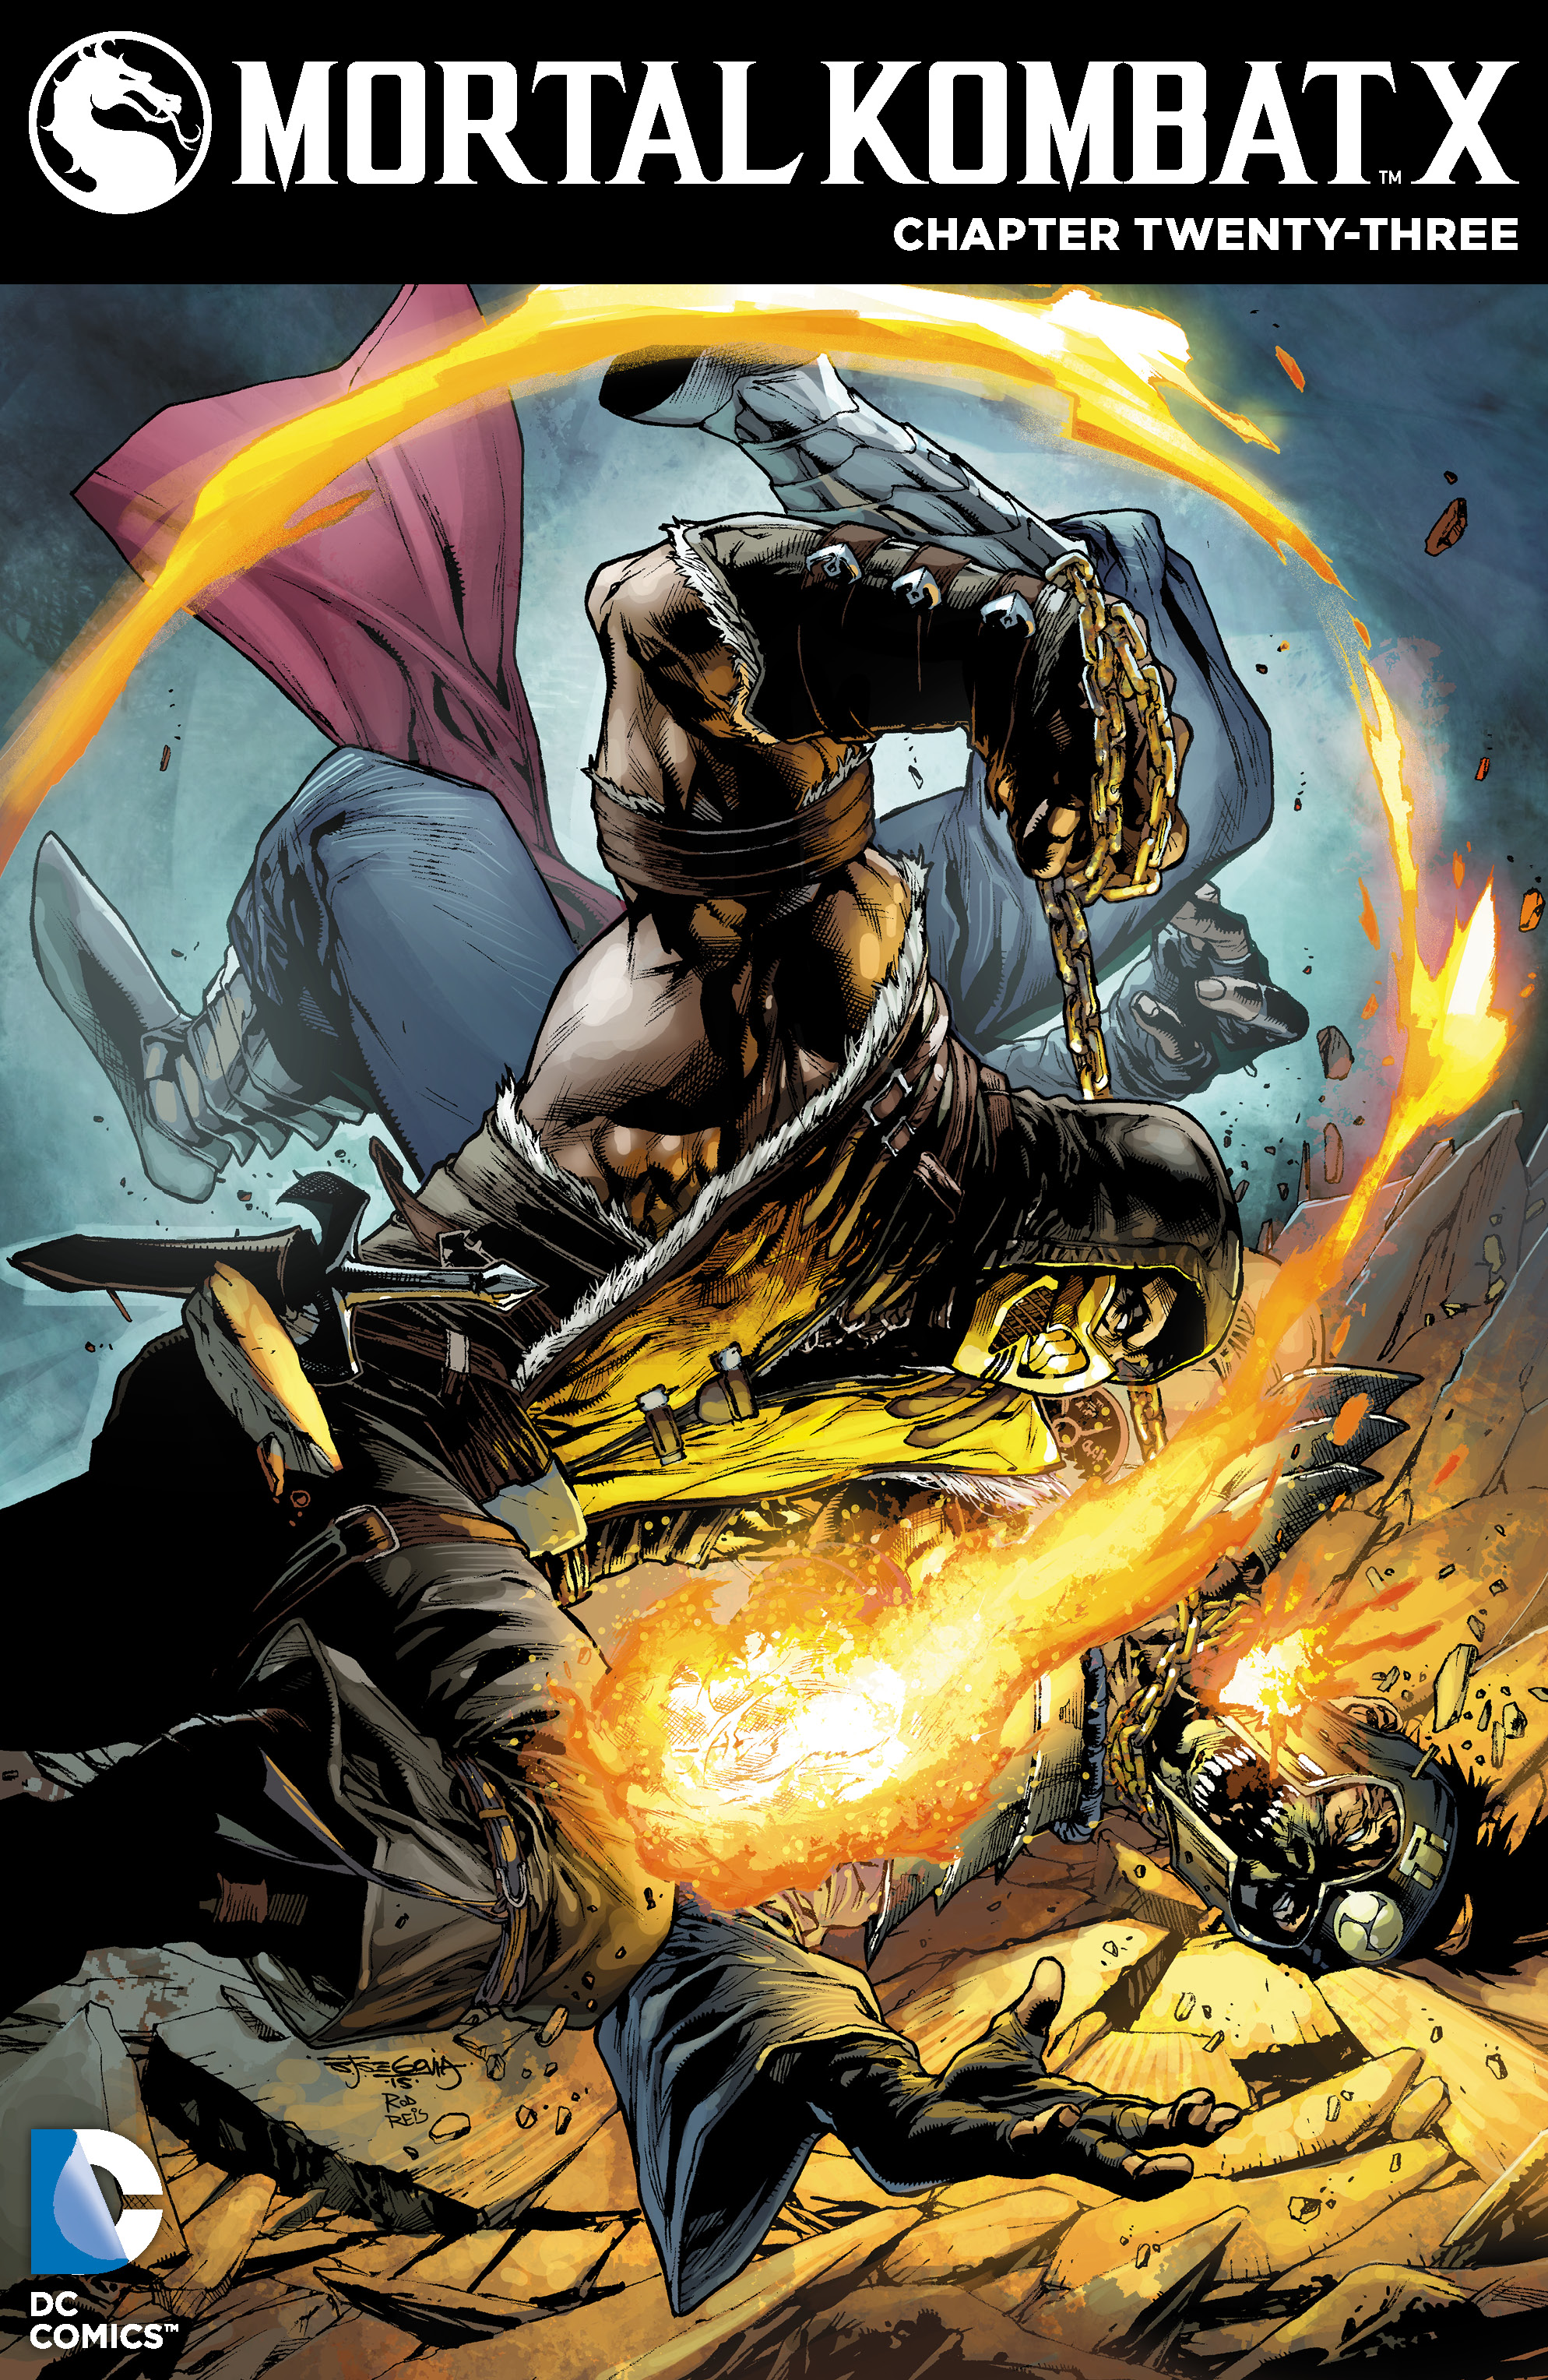 Mortal Kombat X #23 preview images